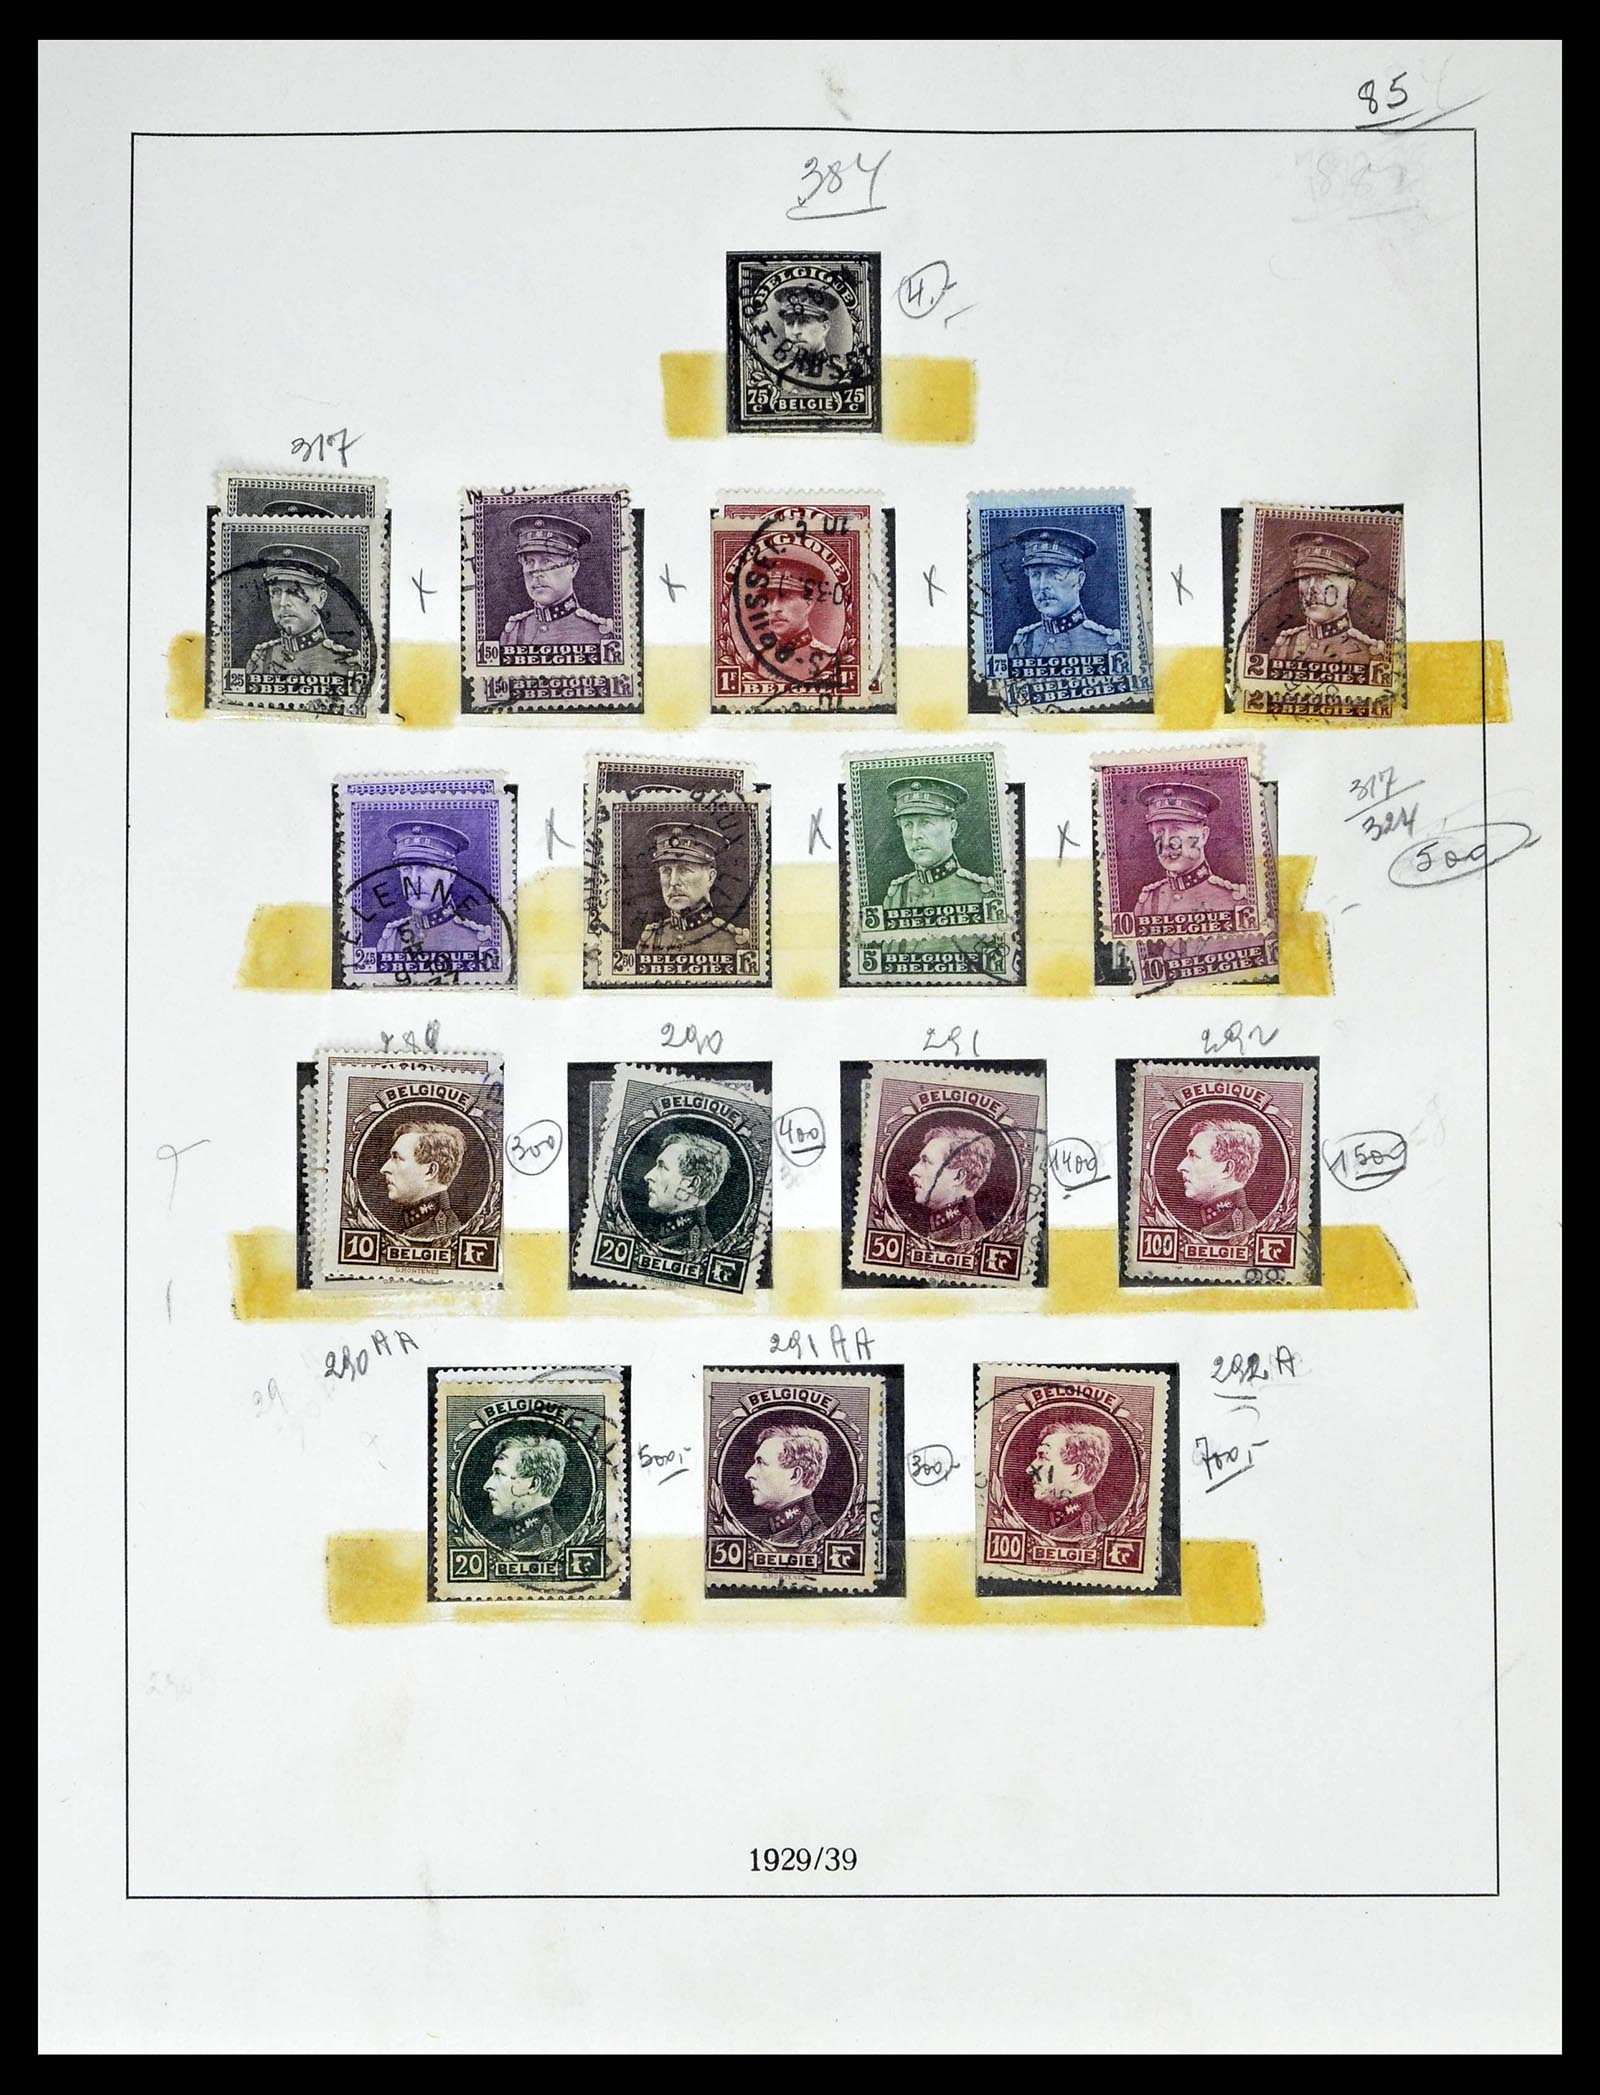 39265 0041 - Stamp collection 39265 Belgium 1849-1962.